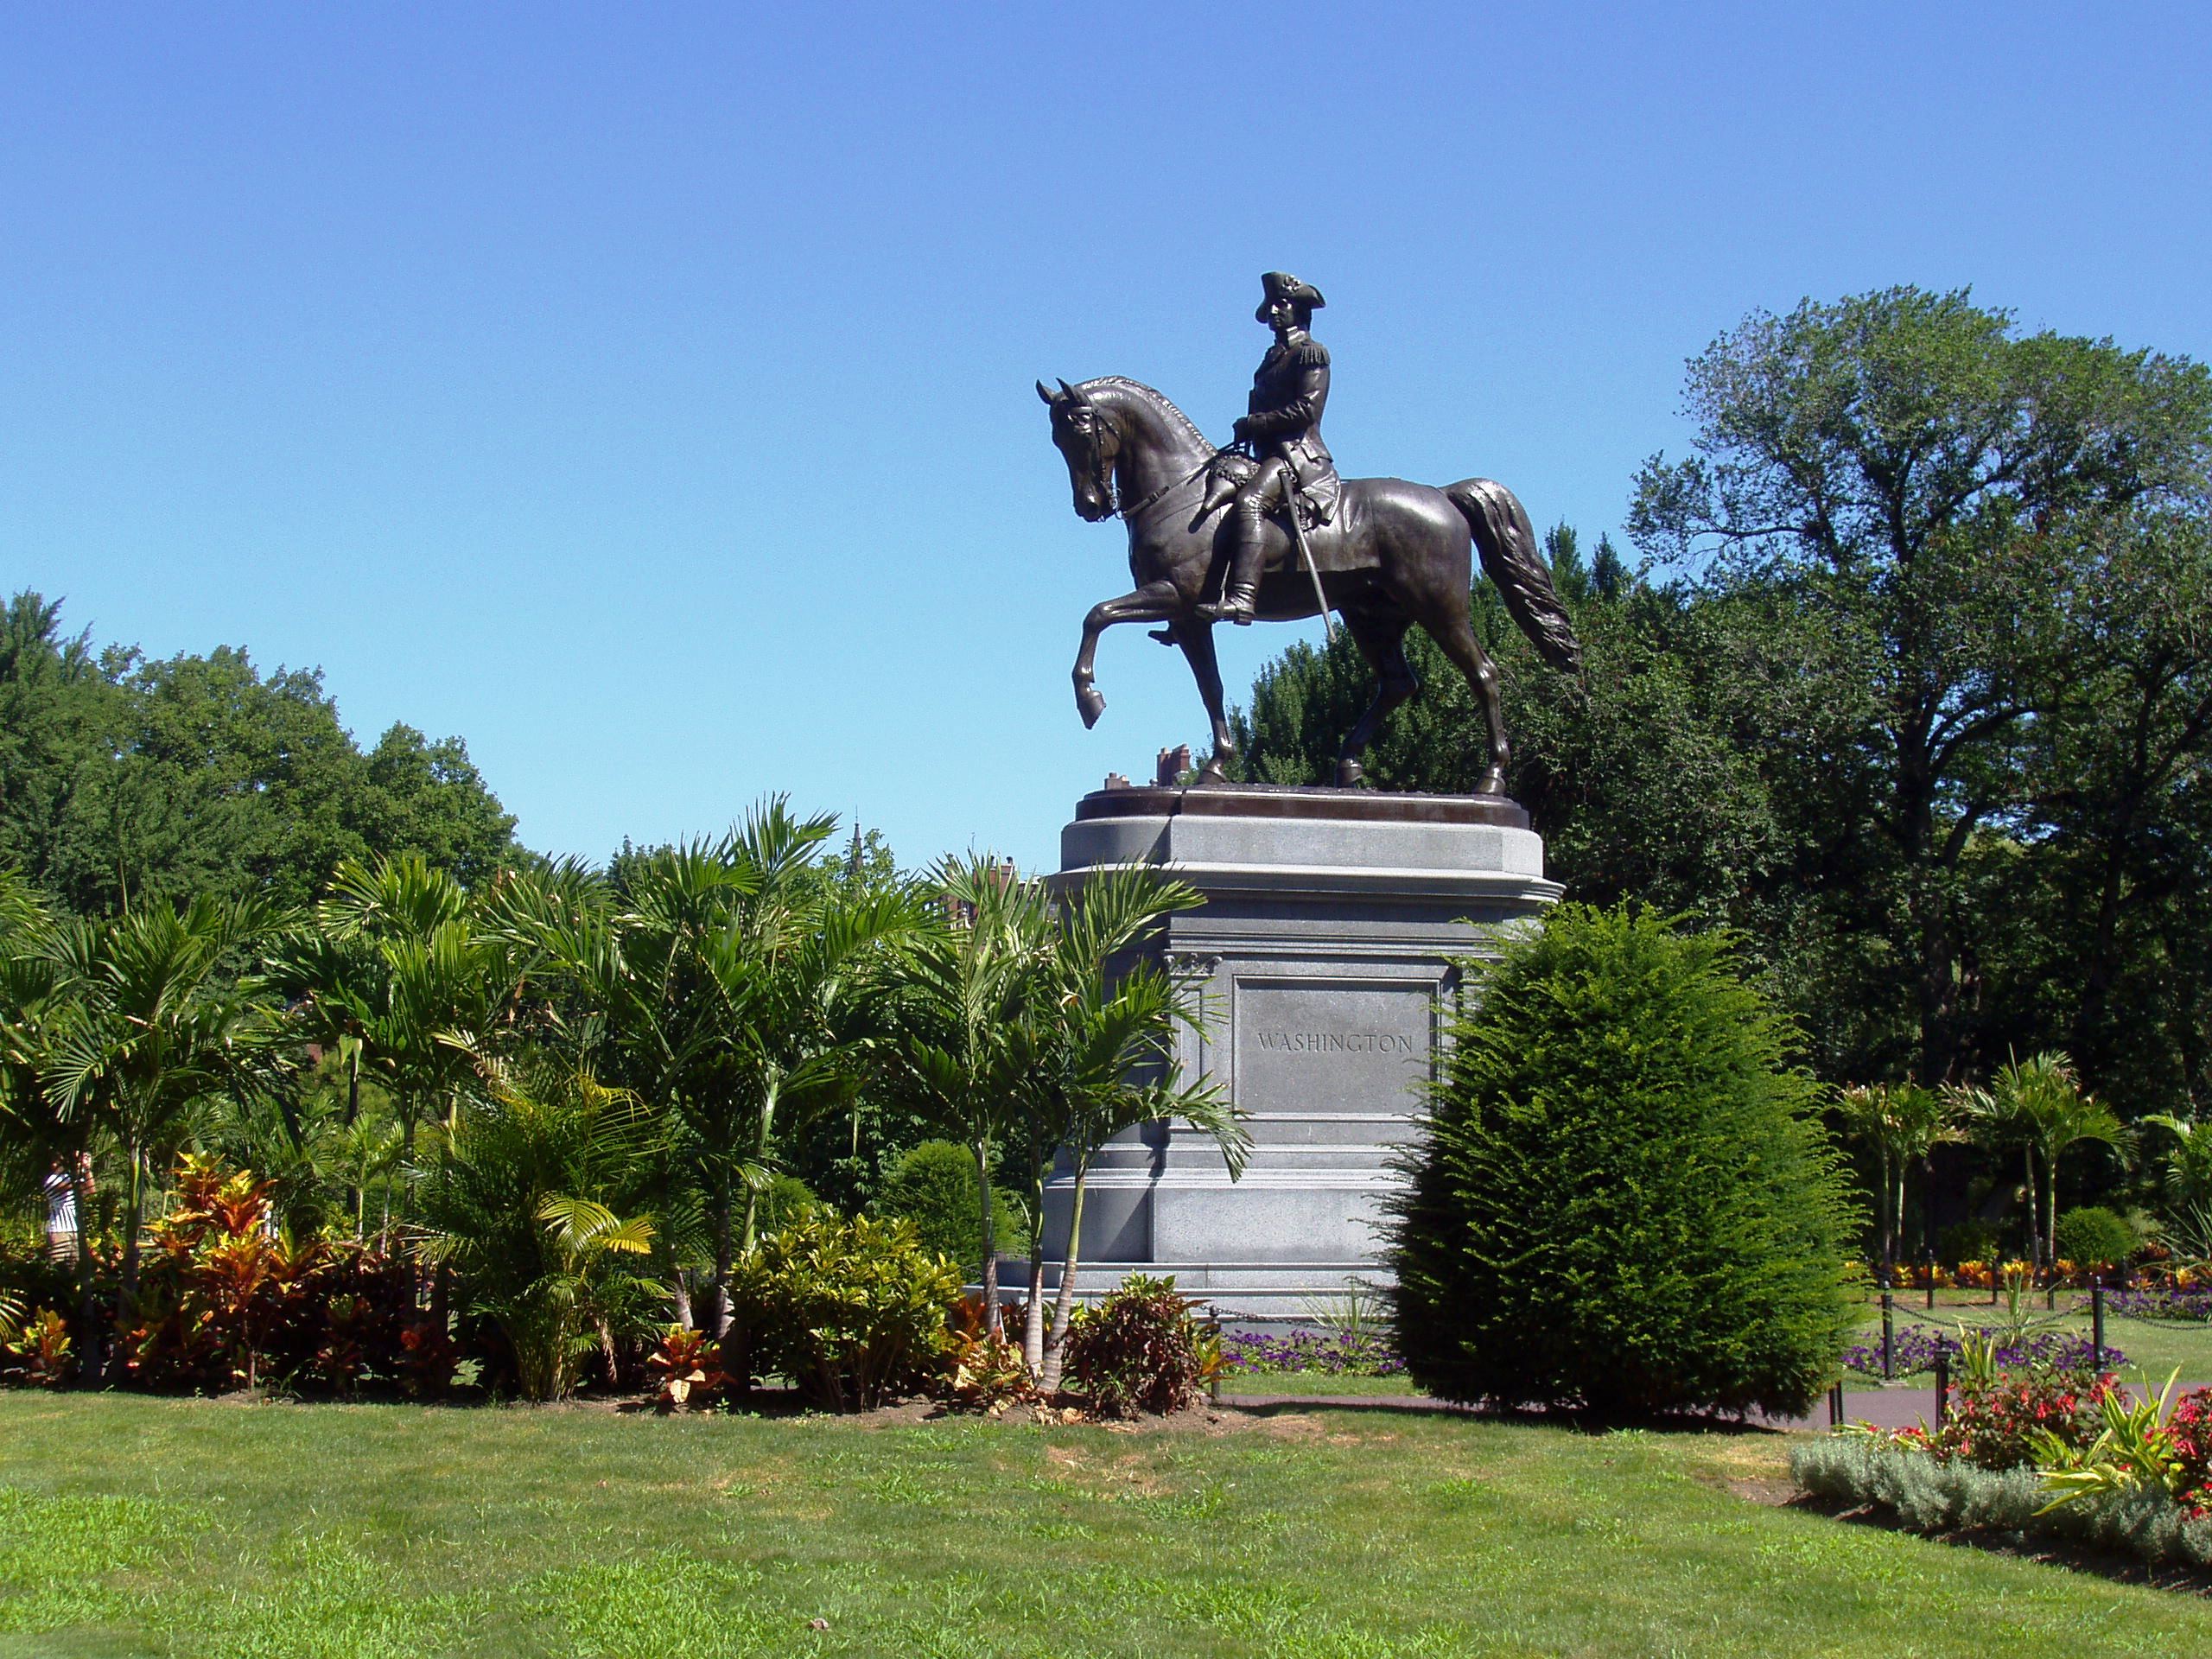 George Washington statue in Boston Public Garden (image from Wikimedia)